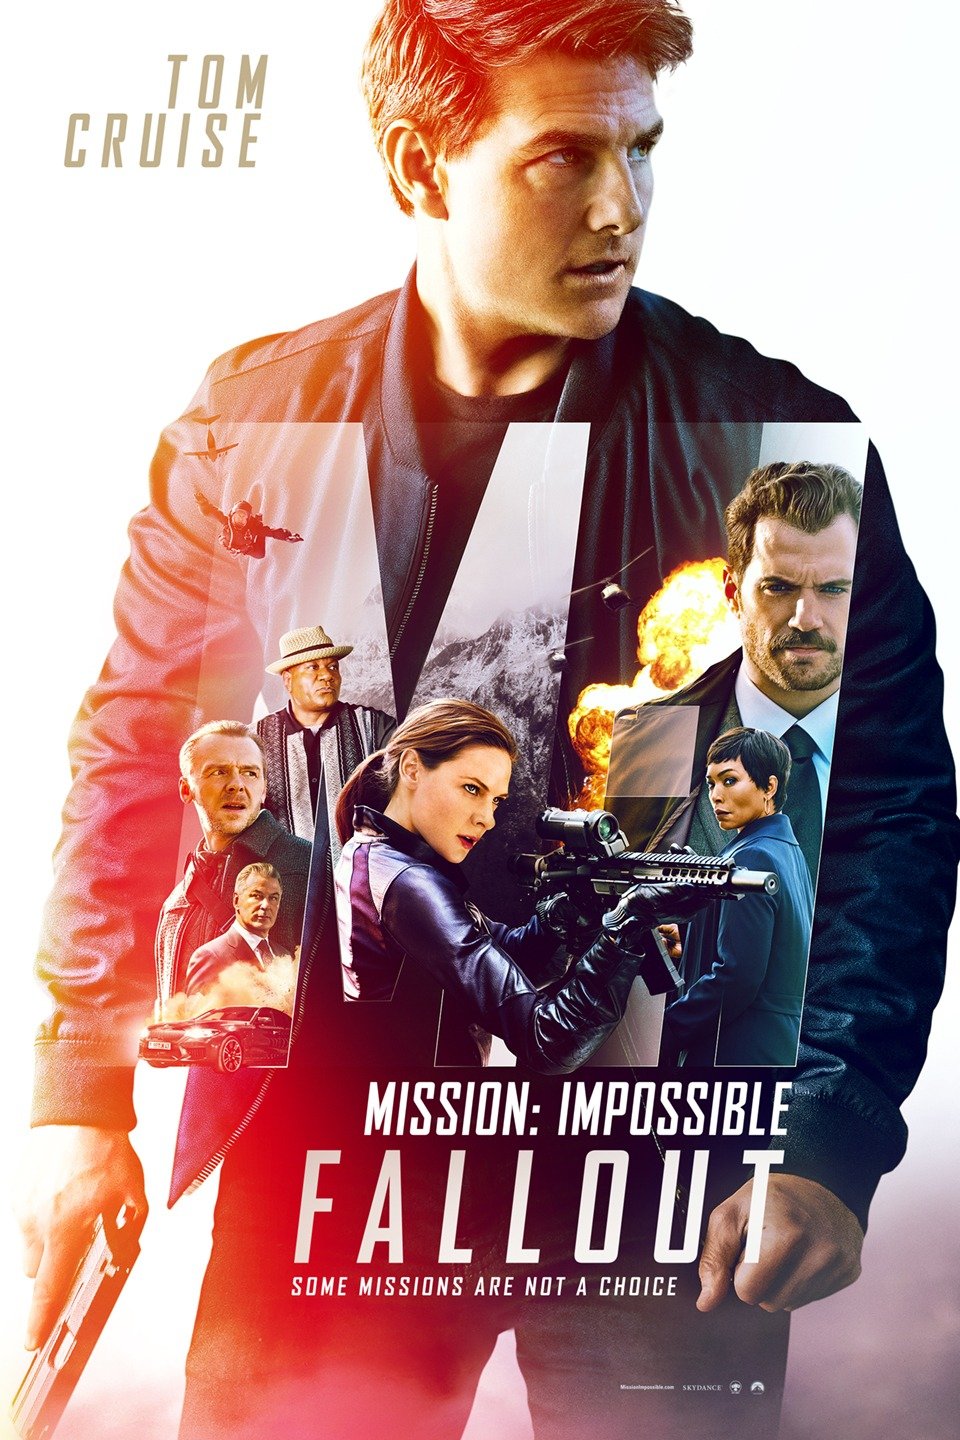 [MINI Super-HQ] Mission: Impossible Fallout (2018) มิชชั่น: อิมพอสซิเบิ้ล ฟอลล์เอาท์ [IMAX Edition] [1080p] [พากย์ไทย 5.1 + เสียงอังกฤษ DTS] [บรรยายไทย + อังกฤษ] [เสียงไทย + ซับไทย] [OPENLOAD]